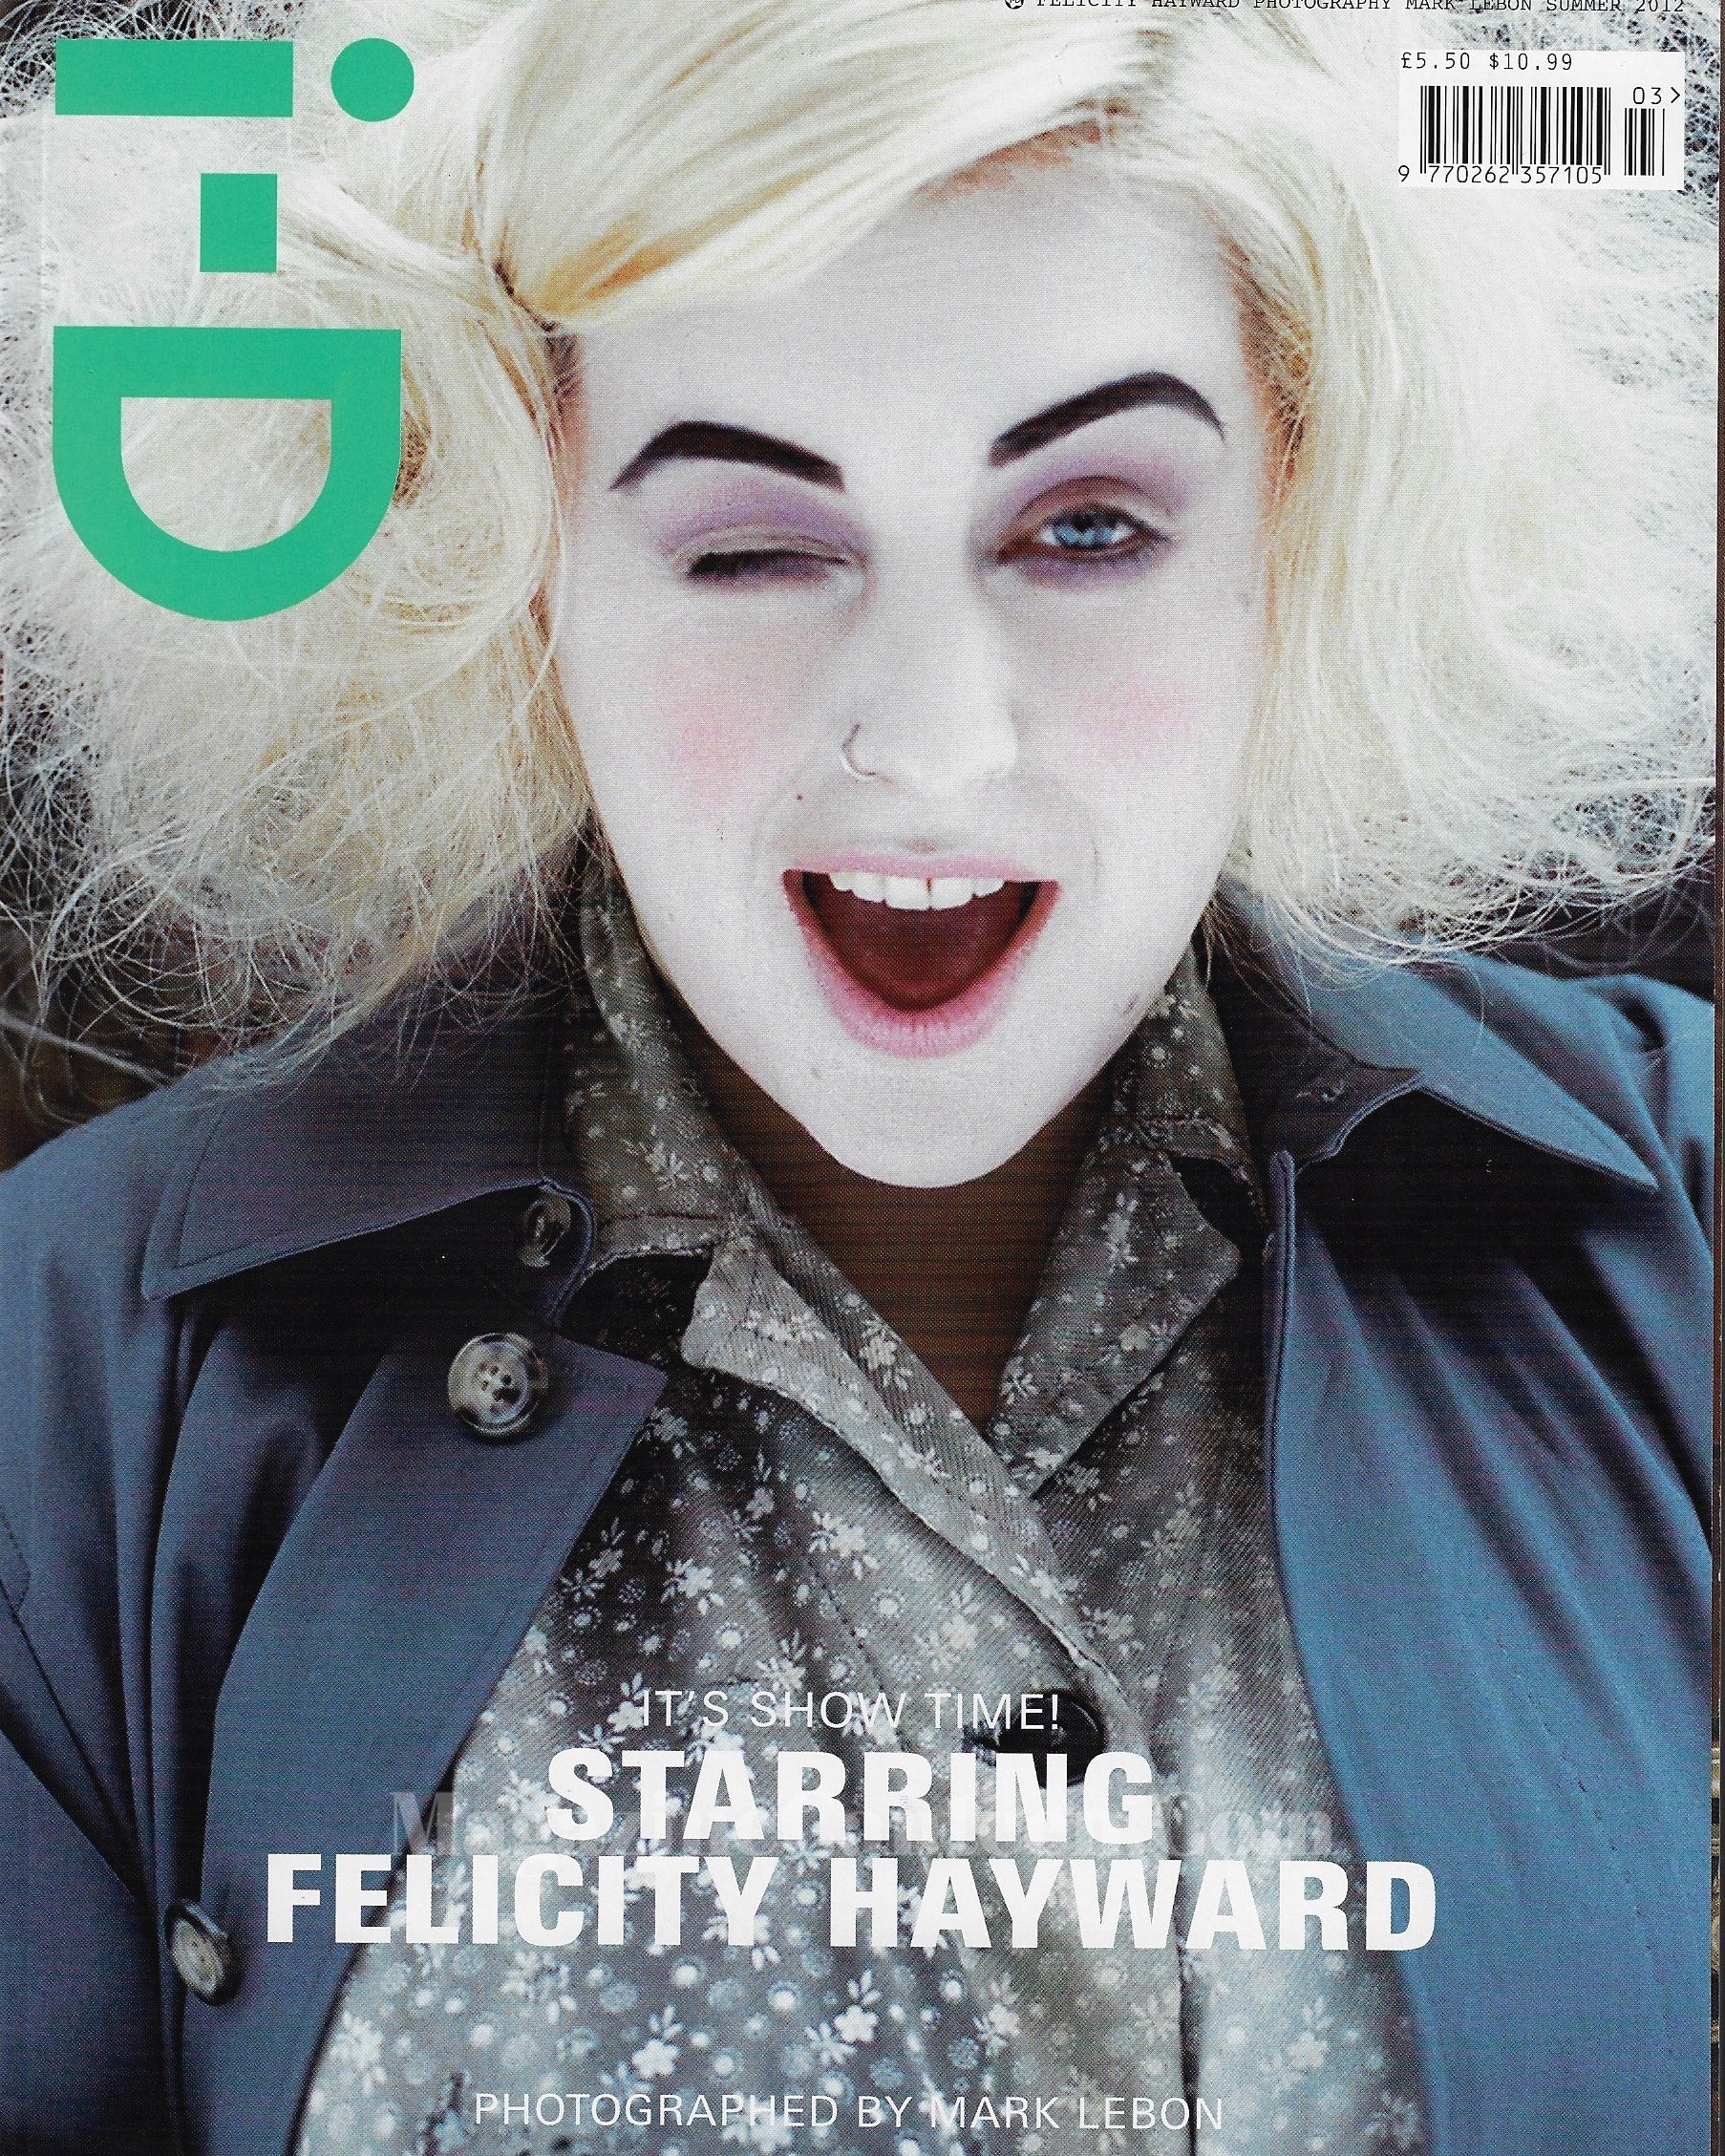 I-D Magazine 319 - Felicity Hayward 2012